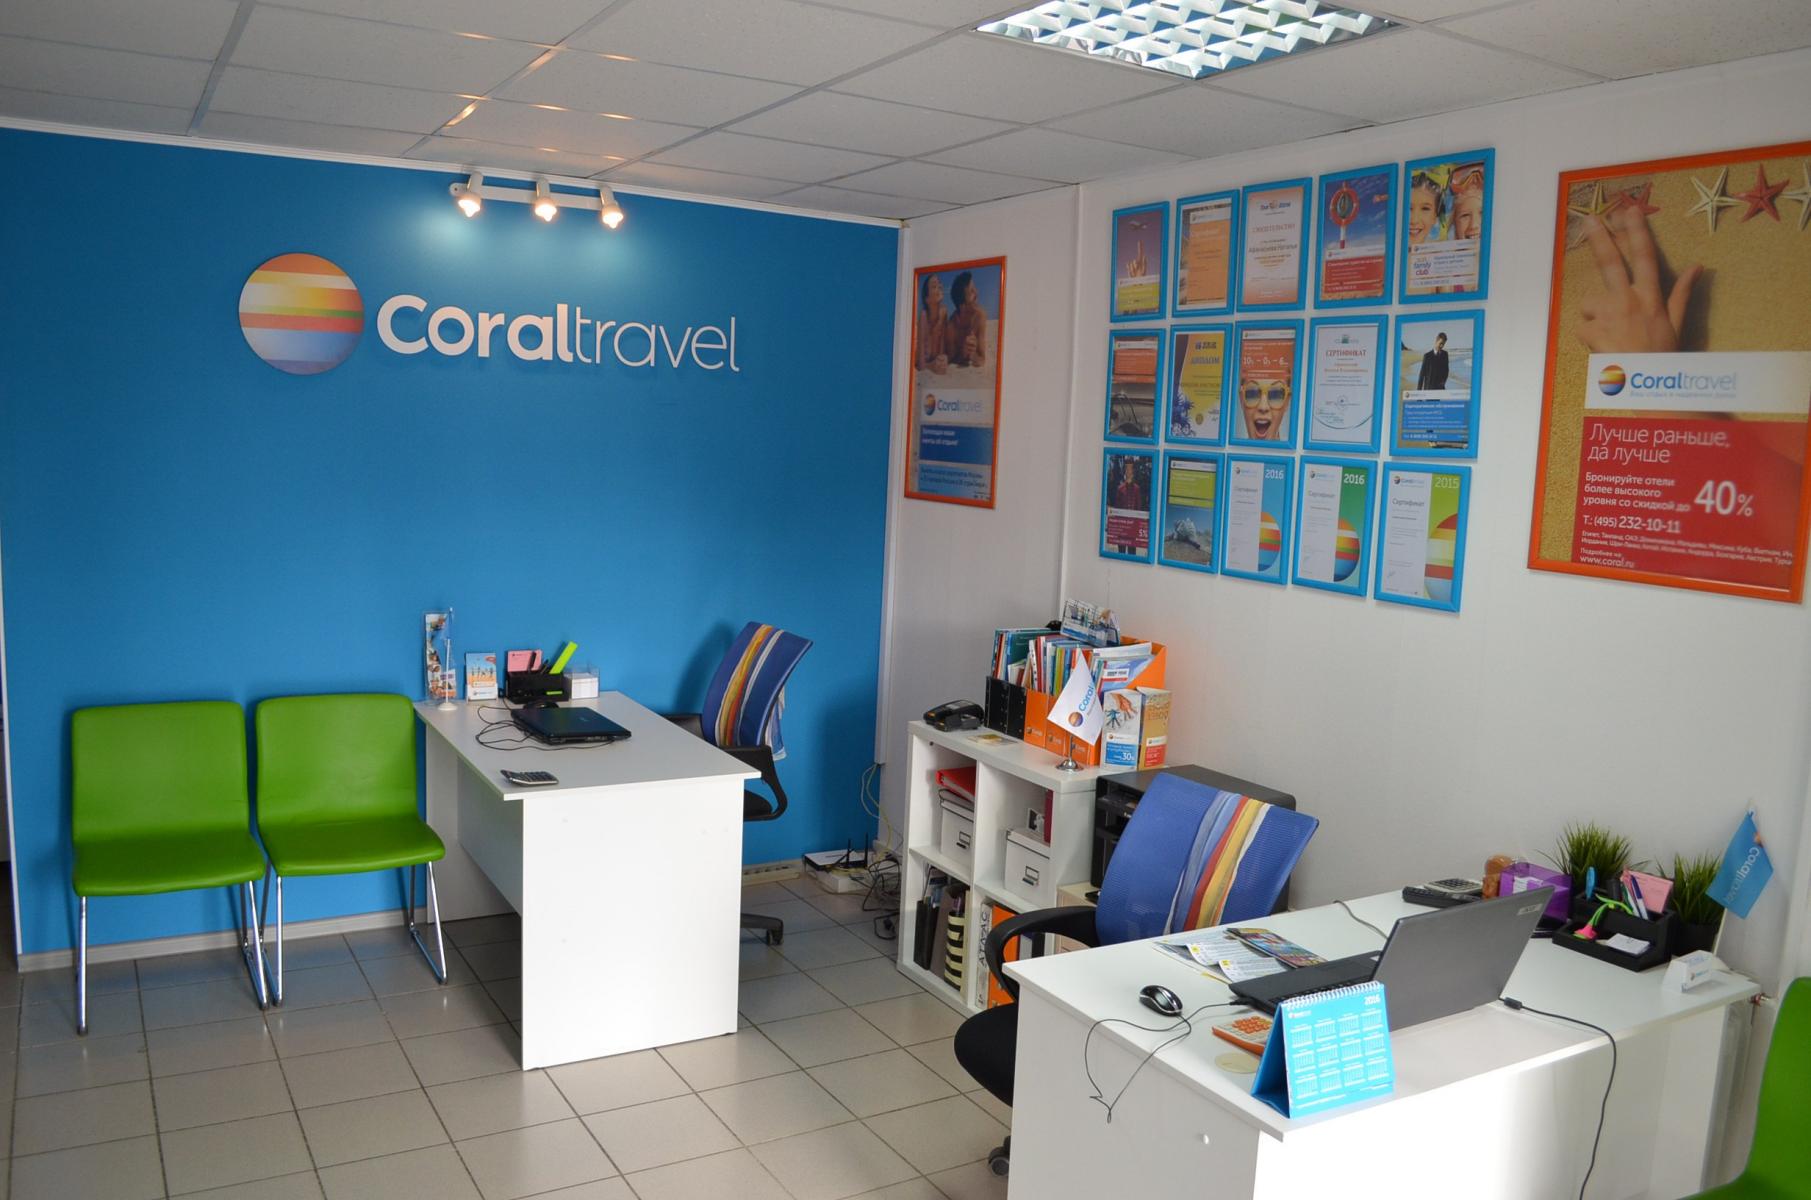 Travel office. Офис турагентства. Coral Travel офис. Офис турагентства Корал. Офис туроператор Coral Travel.